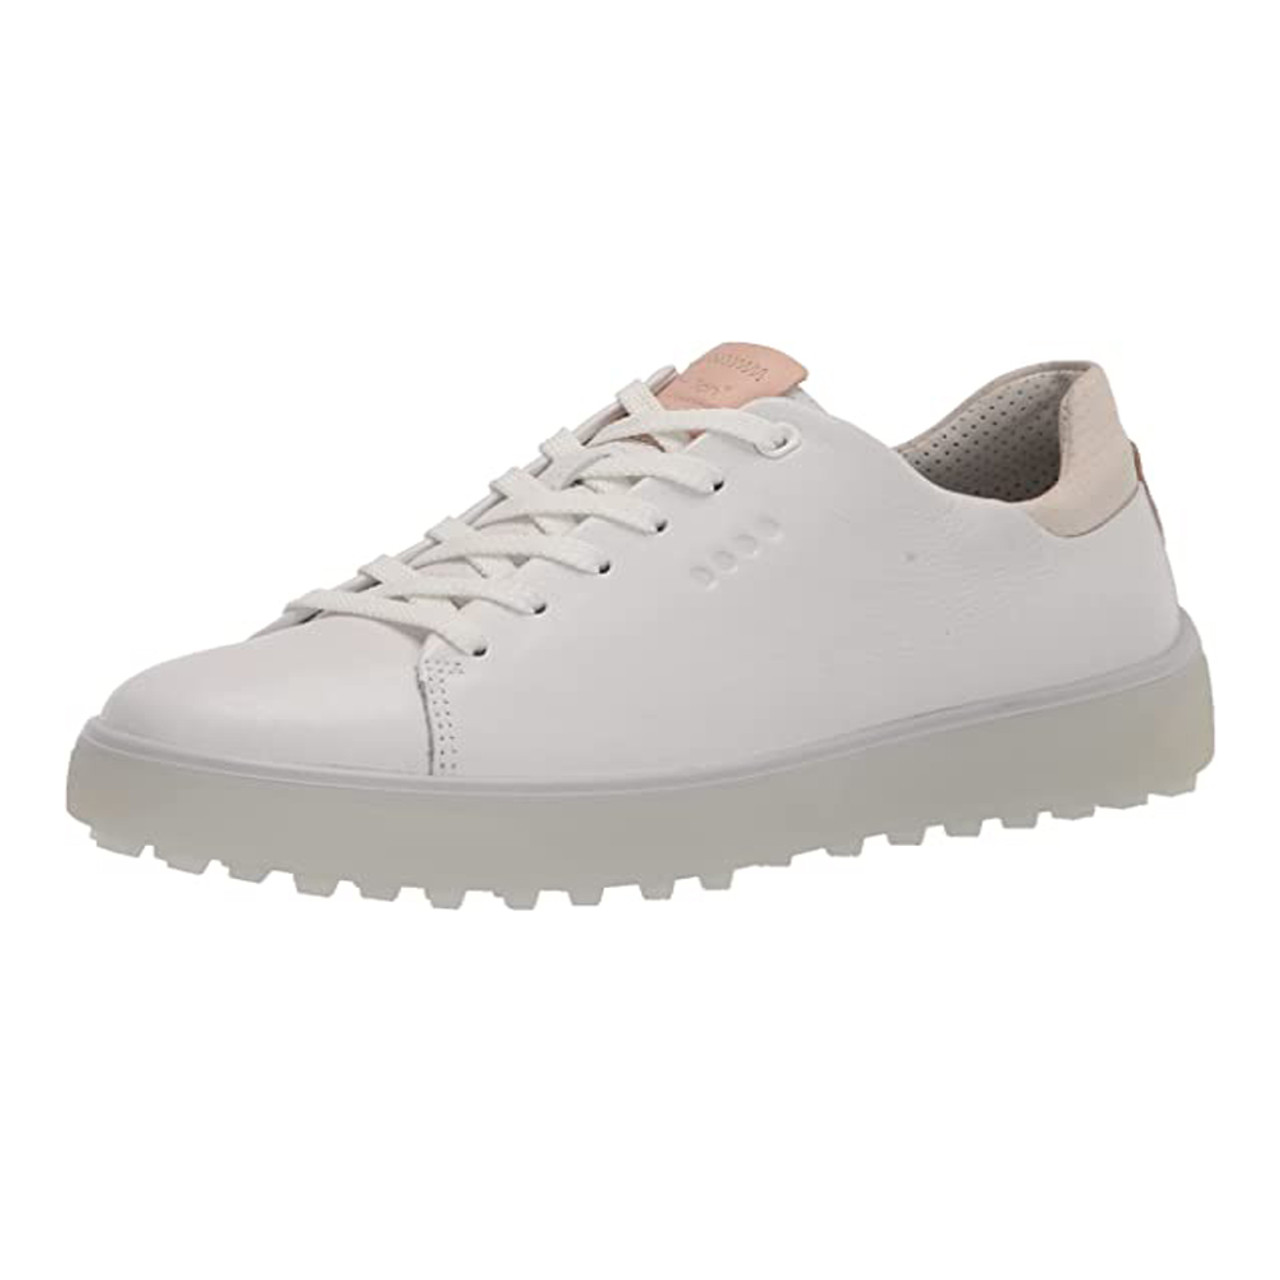 Women's Tray Golf Shoe - White | Discount ECCO Golf Shoes & More - Shoolu.com |